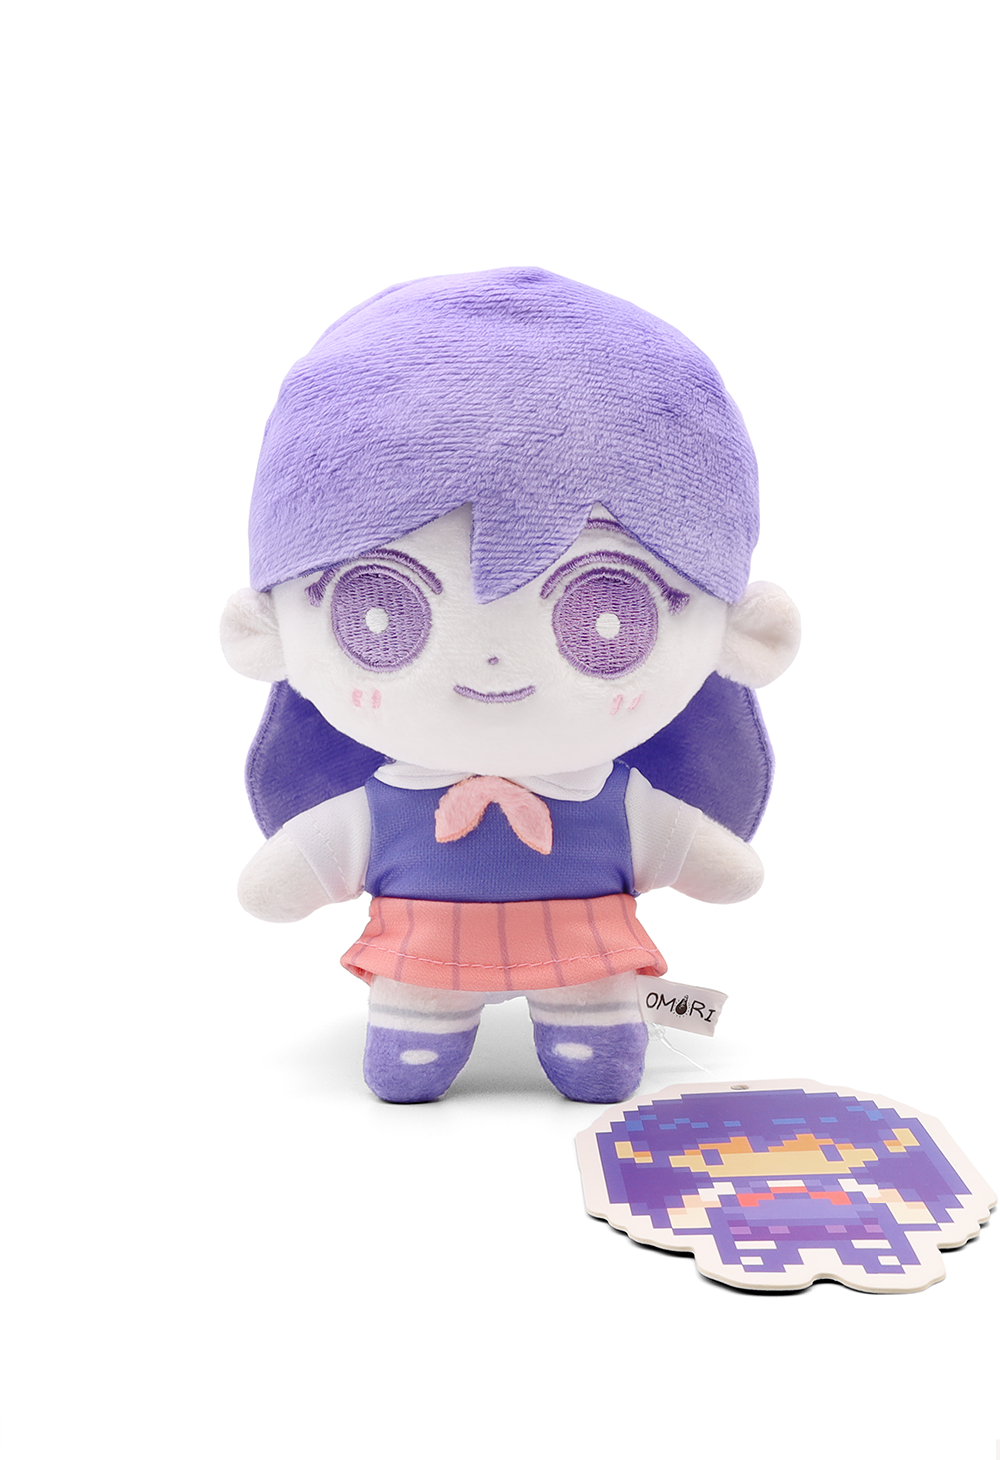 8 OMORI Sunny Plush Doll Stuffed Pillow Toy Plushies Figure Cute Gifts  Omori Cosplay Props Merch Game OMORI Sunny Plush